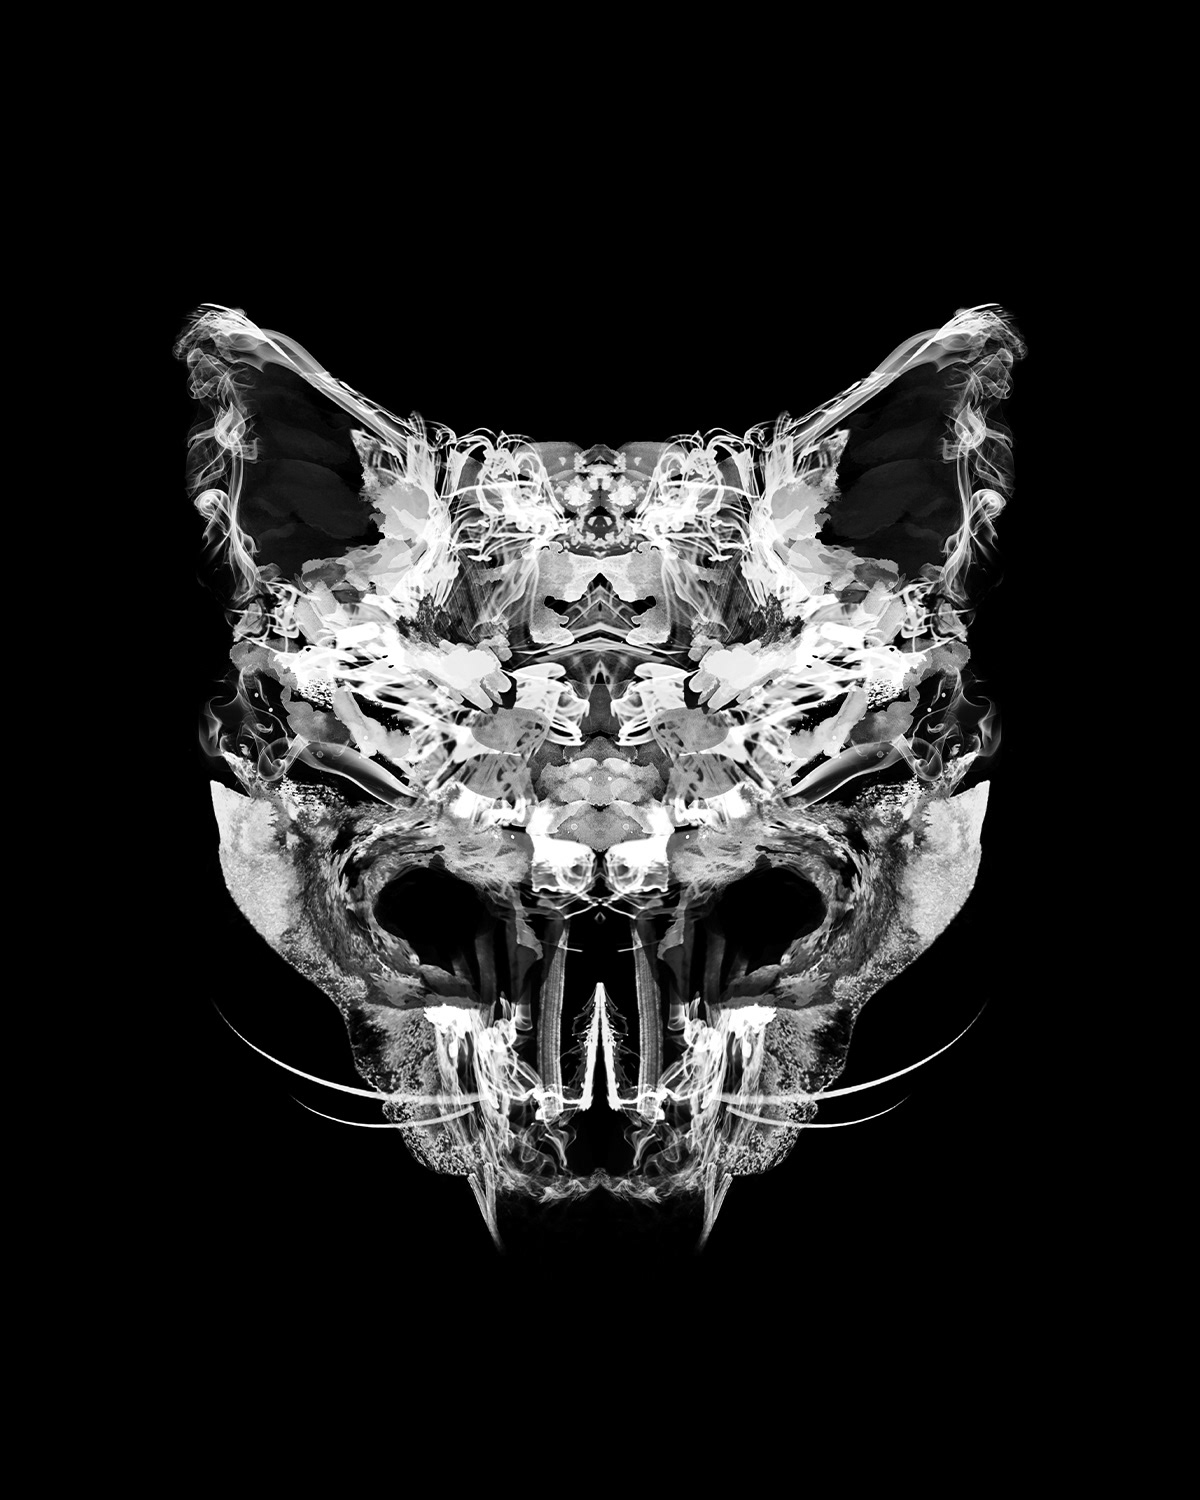 abstract inkblot rorschach skull dark skeleton xray mirror animal dark art